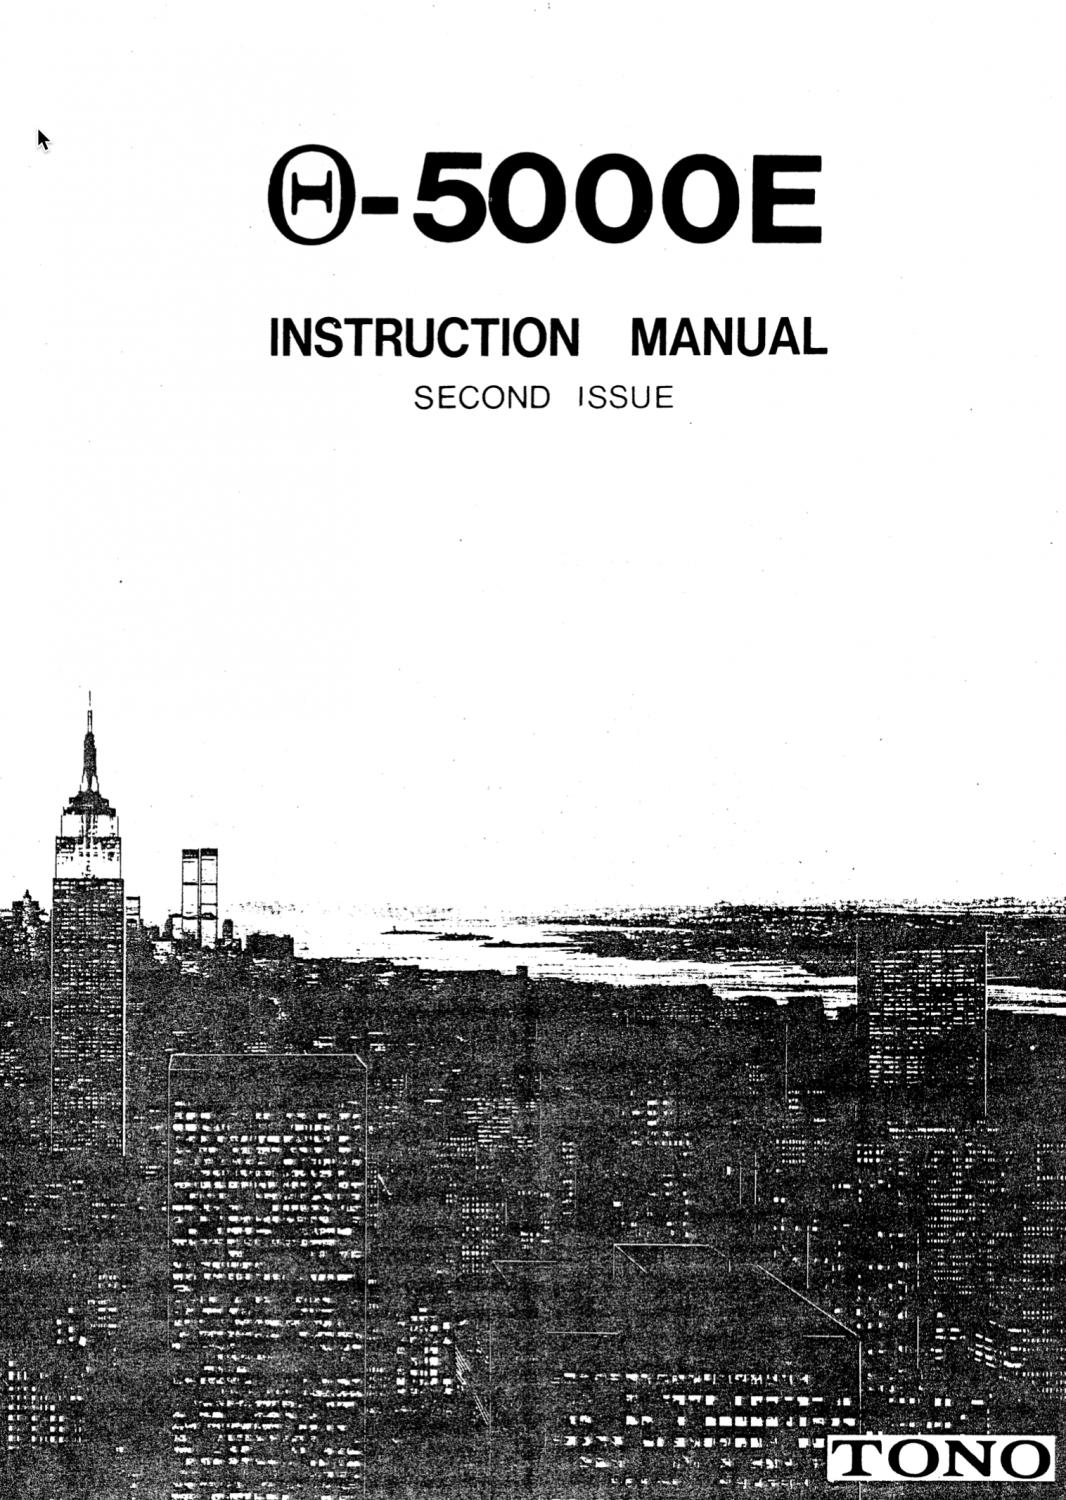 TONO THETA 5000E Sender-Decoder - Instruction Manual - 2nd Edition